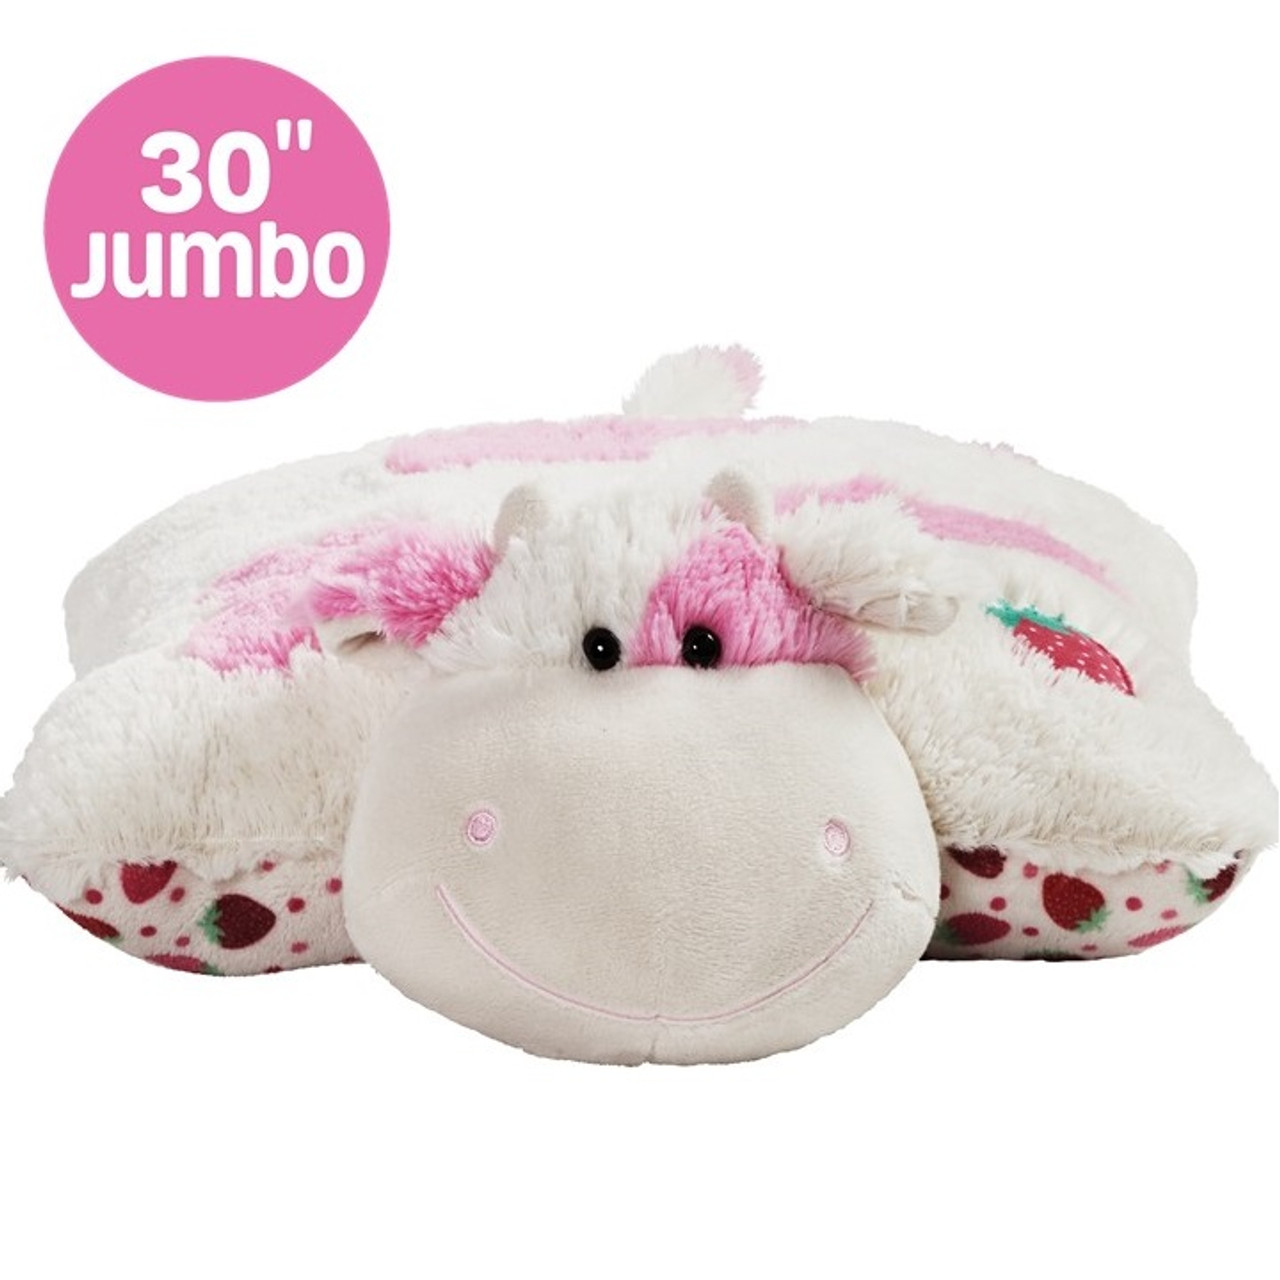 Original Sweet Scented Strawberry Cow Jumbo 30 Pillow Pet